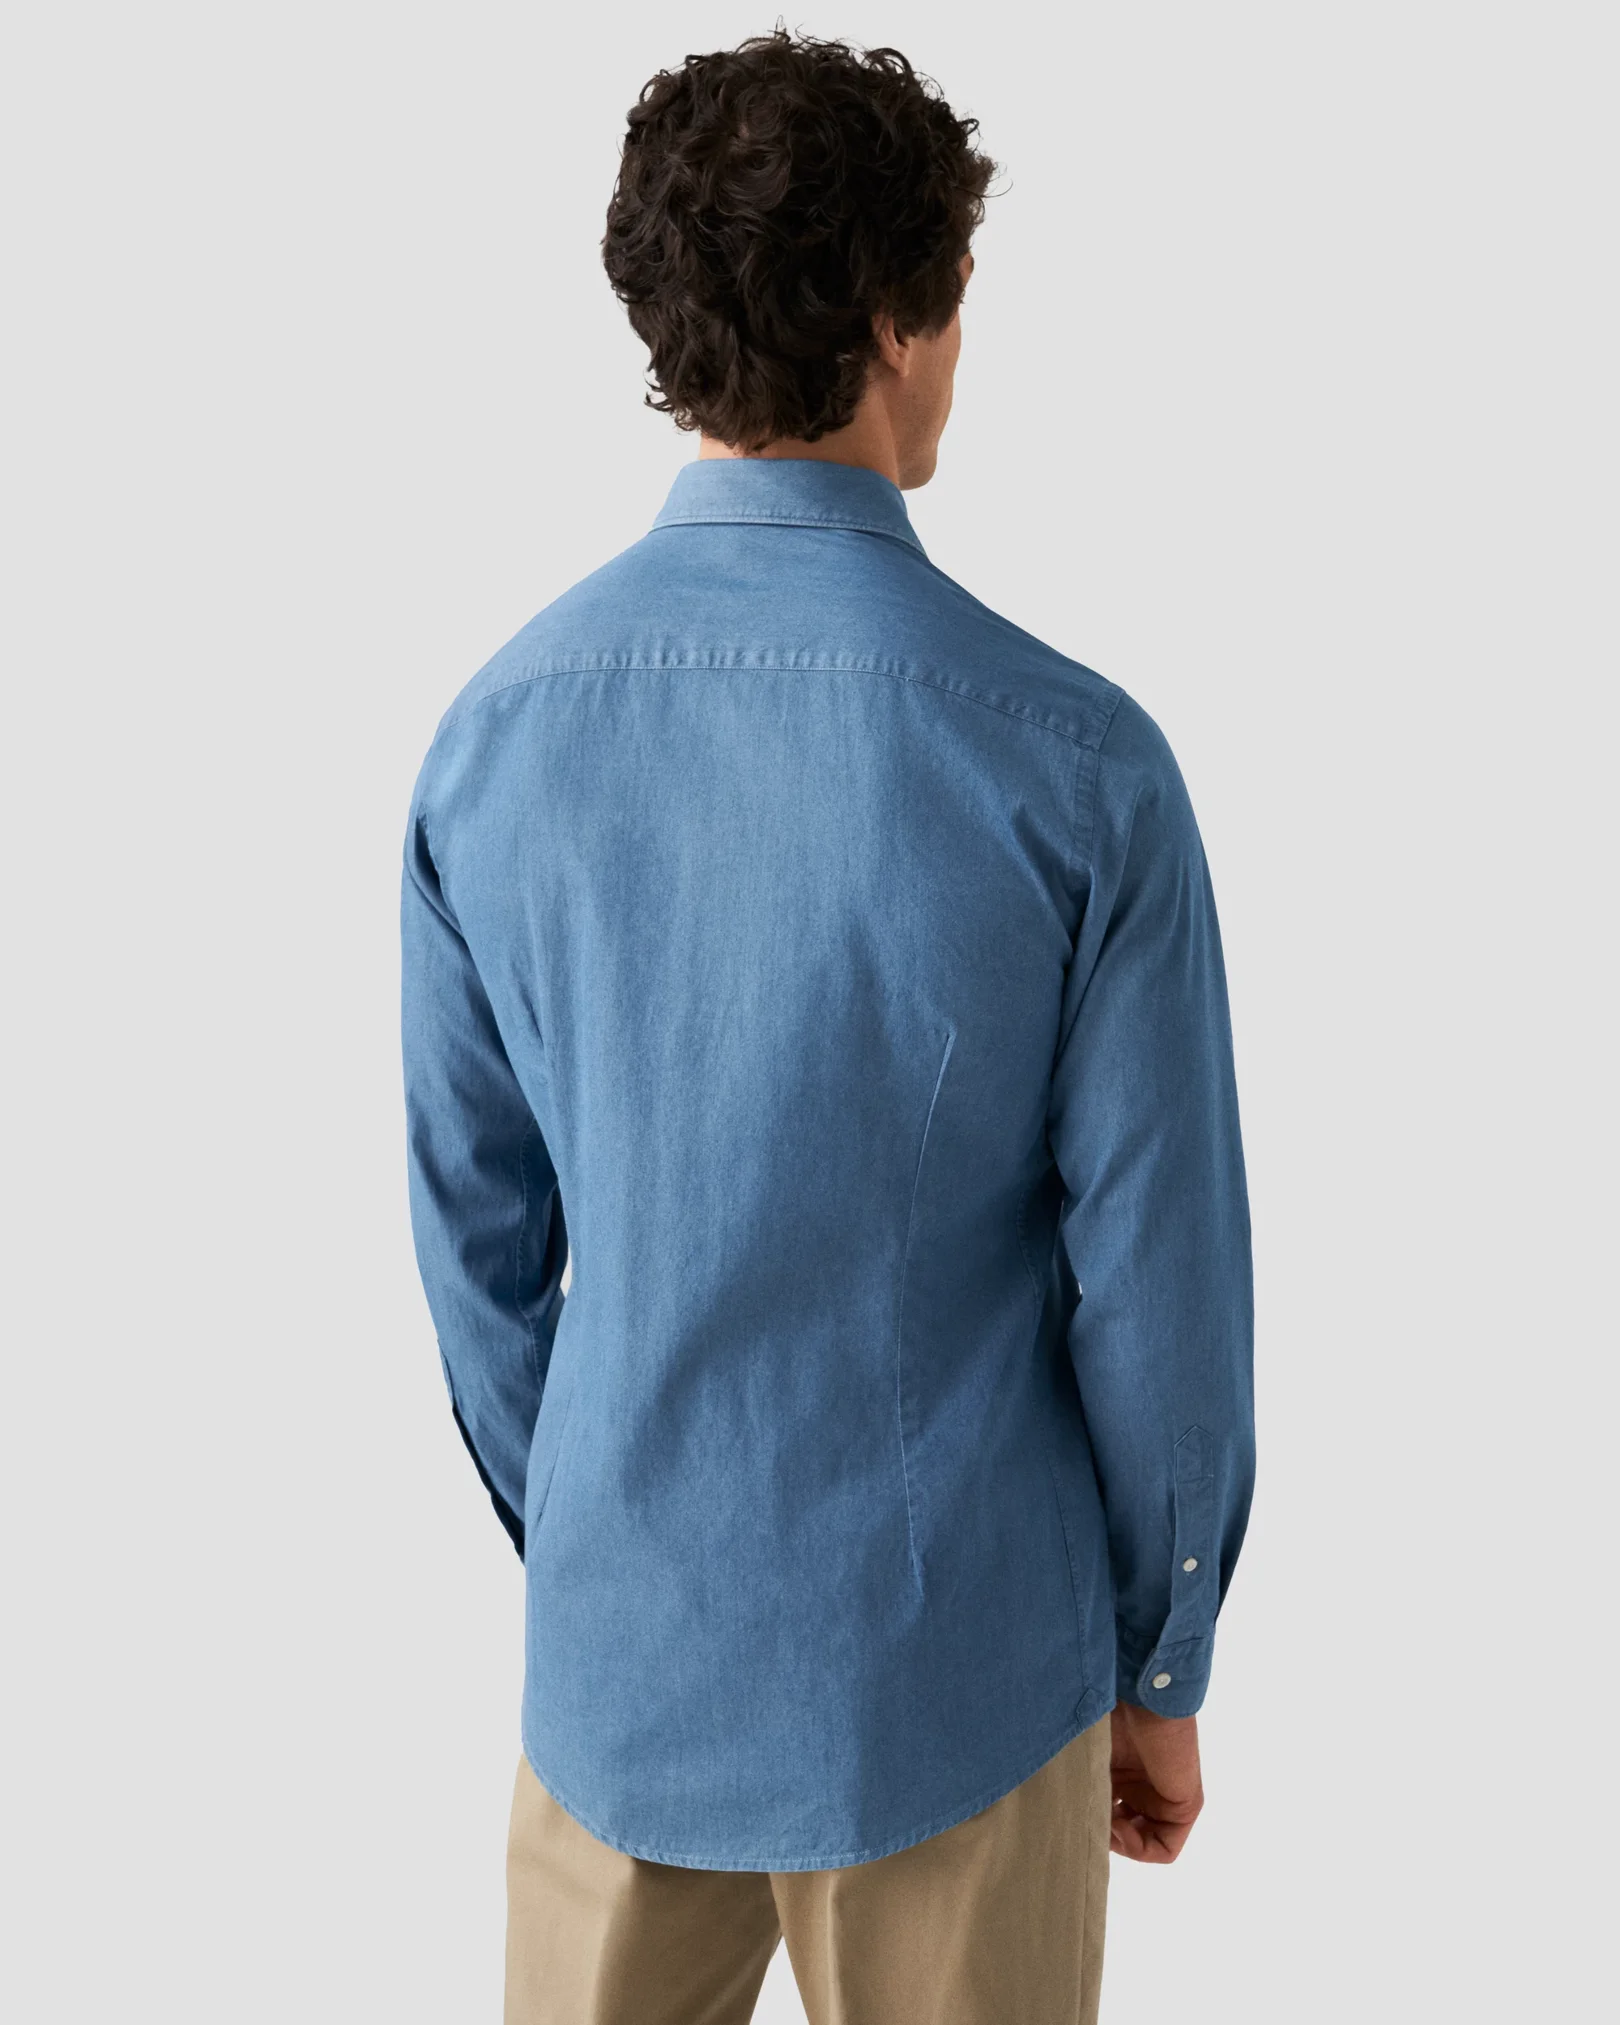 Eton - lightweight denim shirt soft